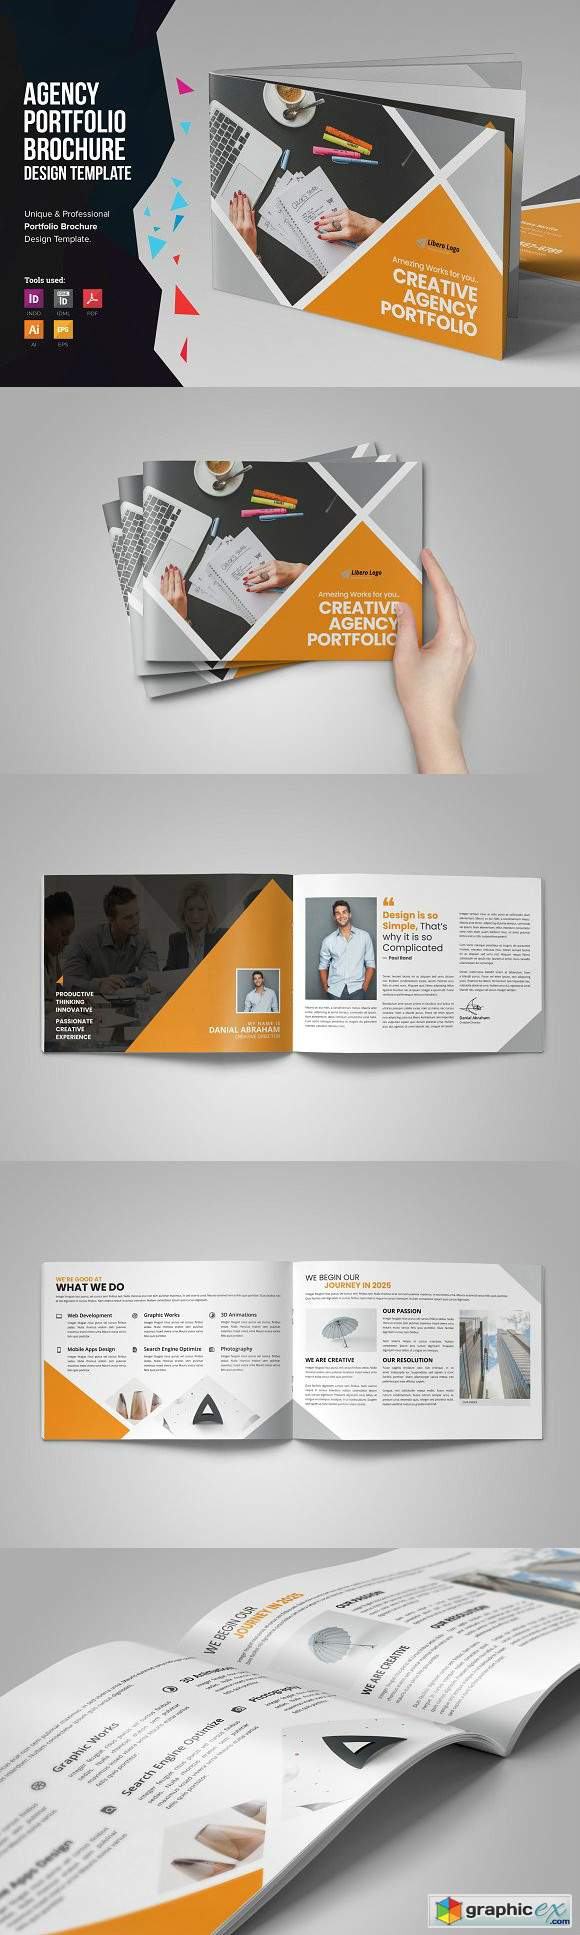 Digital Agency Portfolio Brochure v2